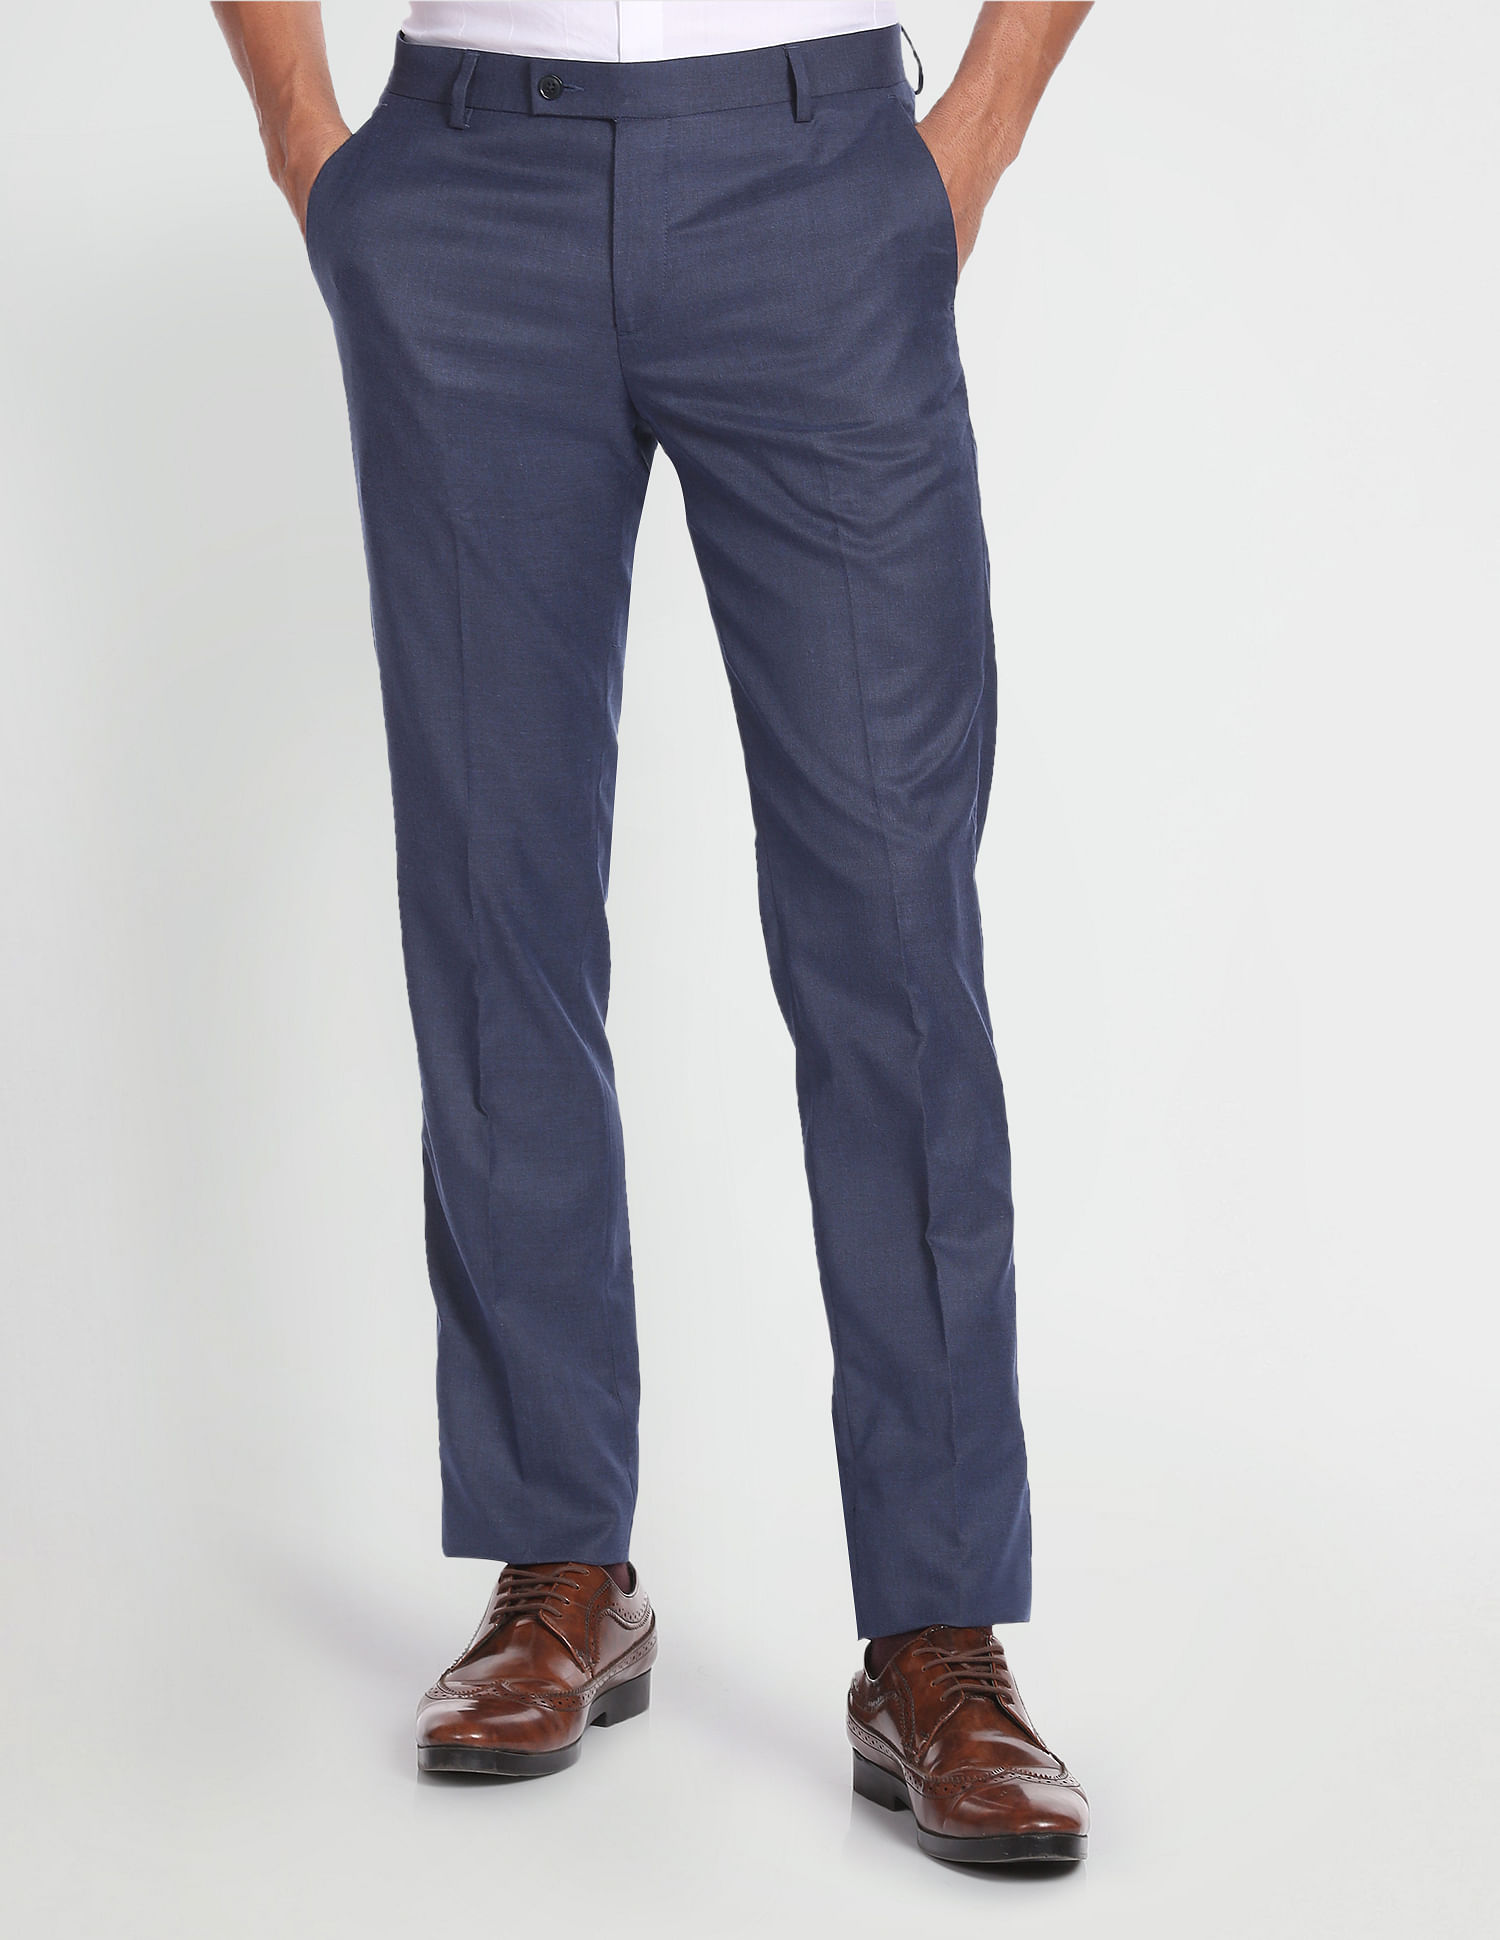 Buy Brown Trousers & Pants for Men by ARROW Online | Ajio.com